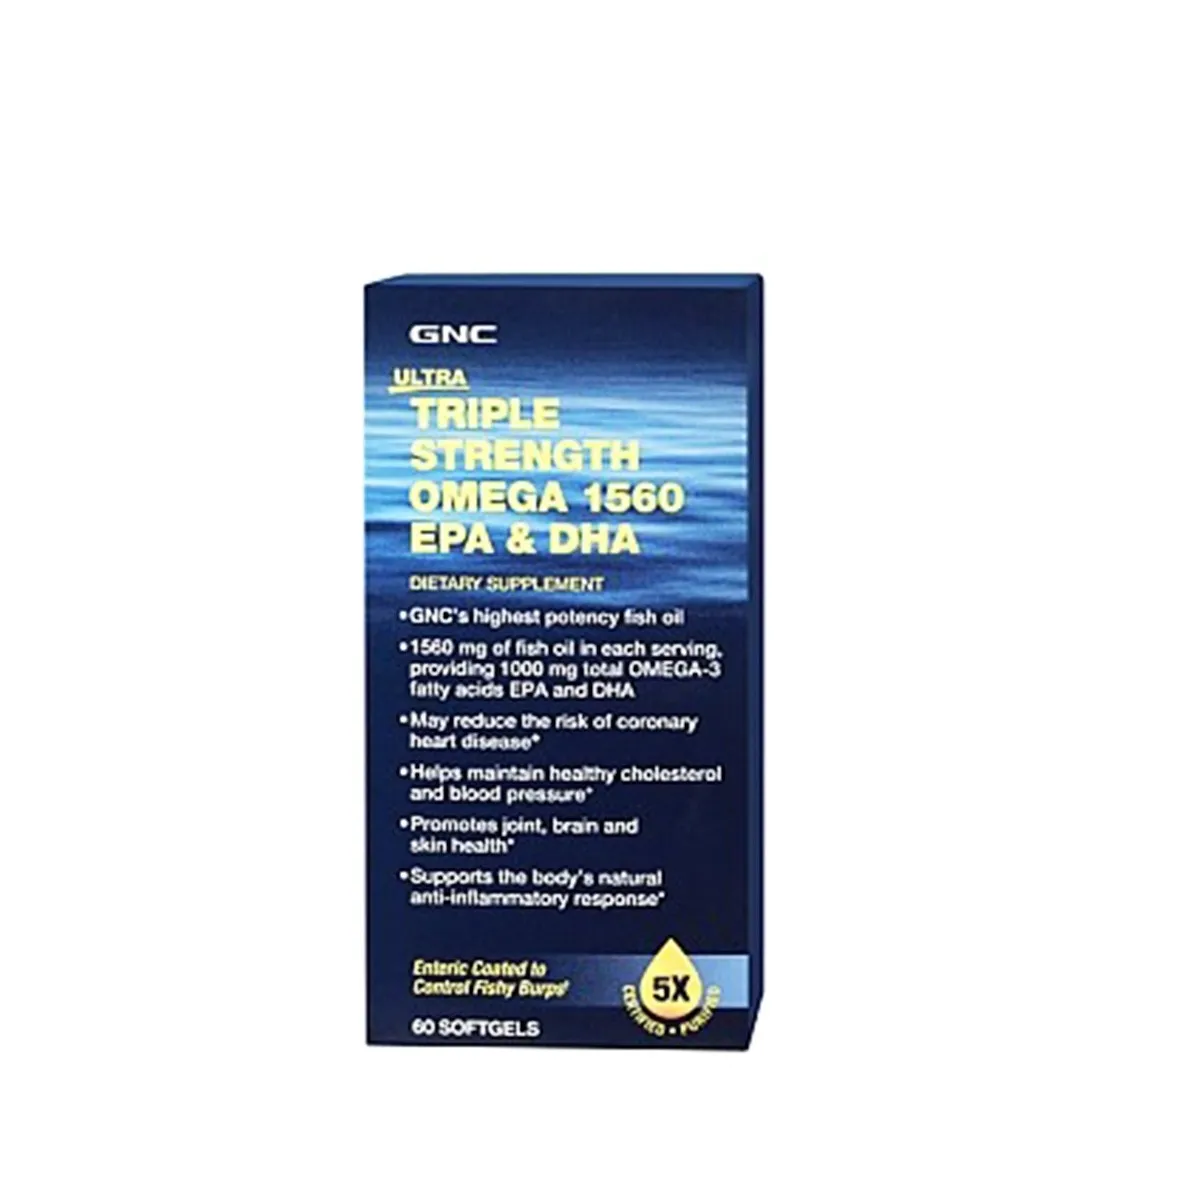 Ultra Triple Strenght Omega 1560 EPA & DHA, 60 capsule gelatinoase, GNC